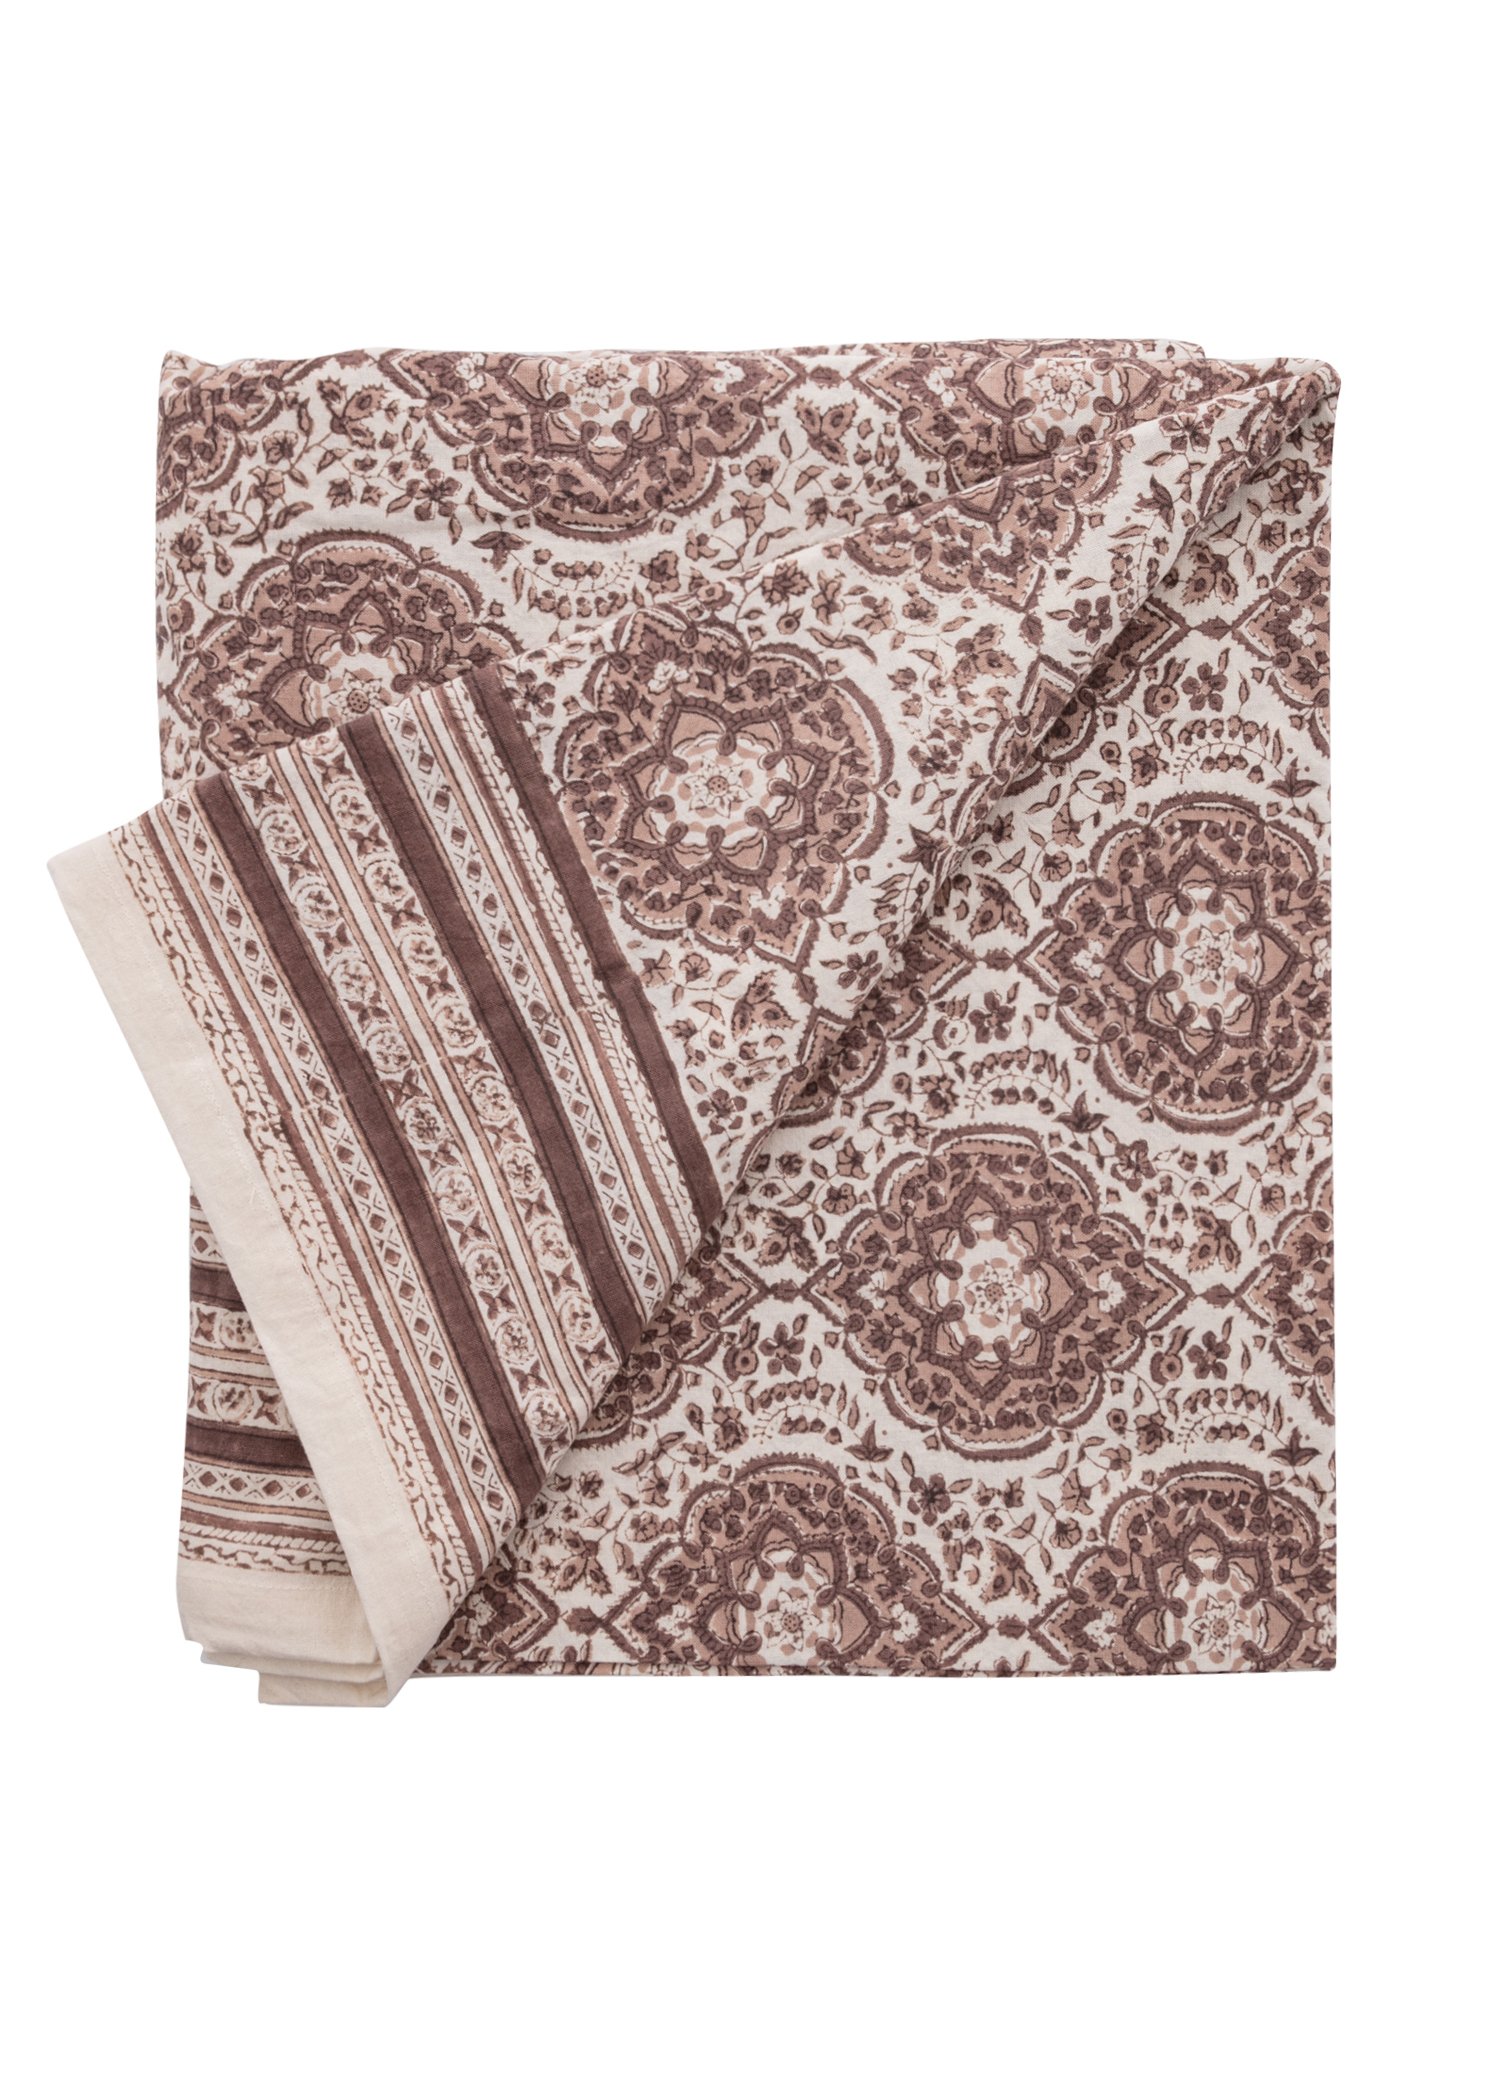 Block-printed cotton tablecloth